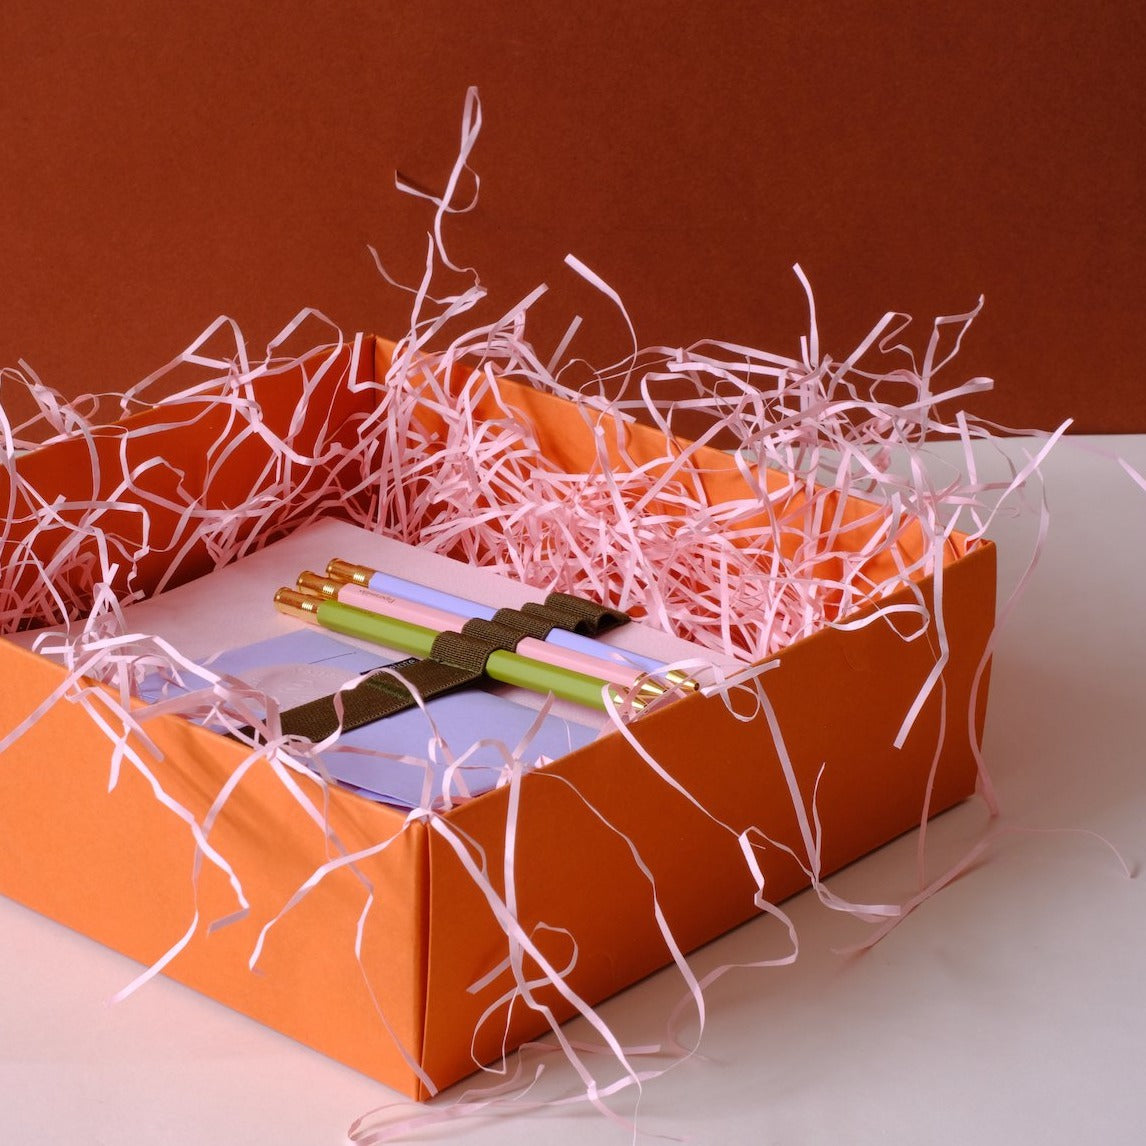 Gift Set in Orange Gift Box